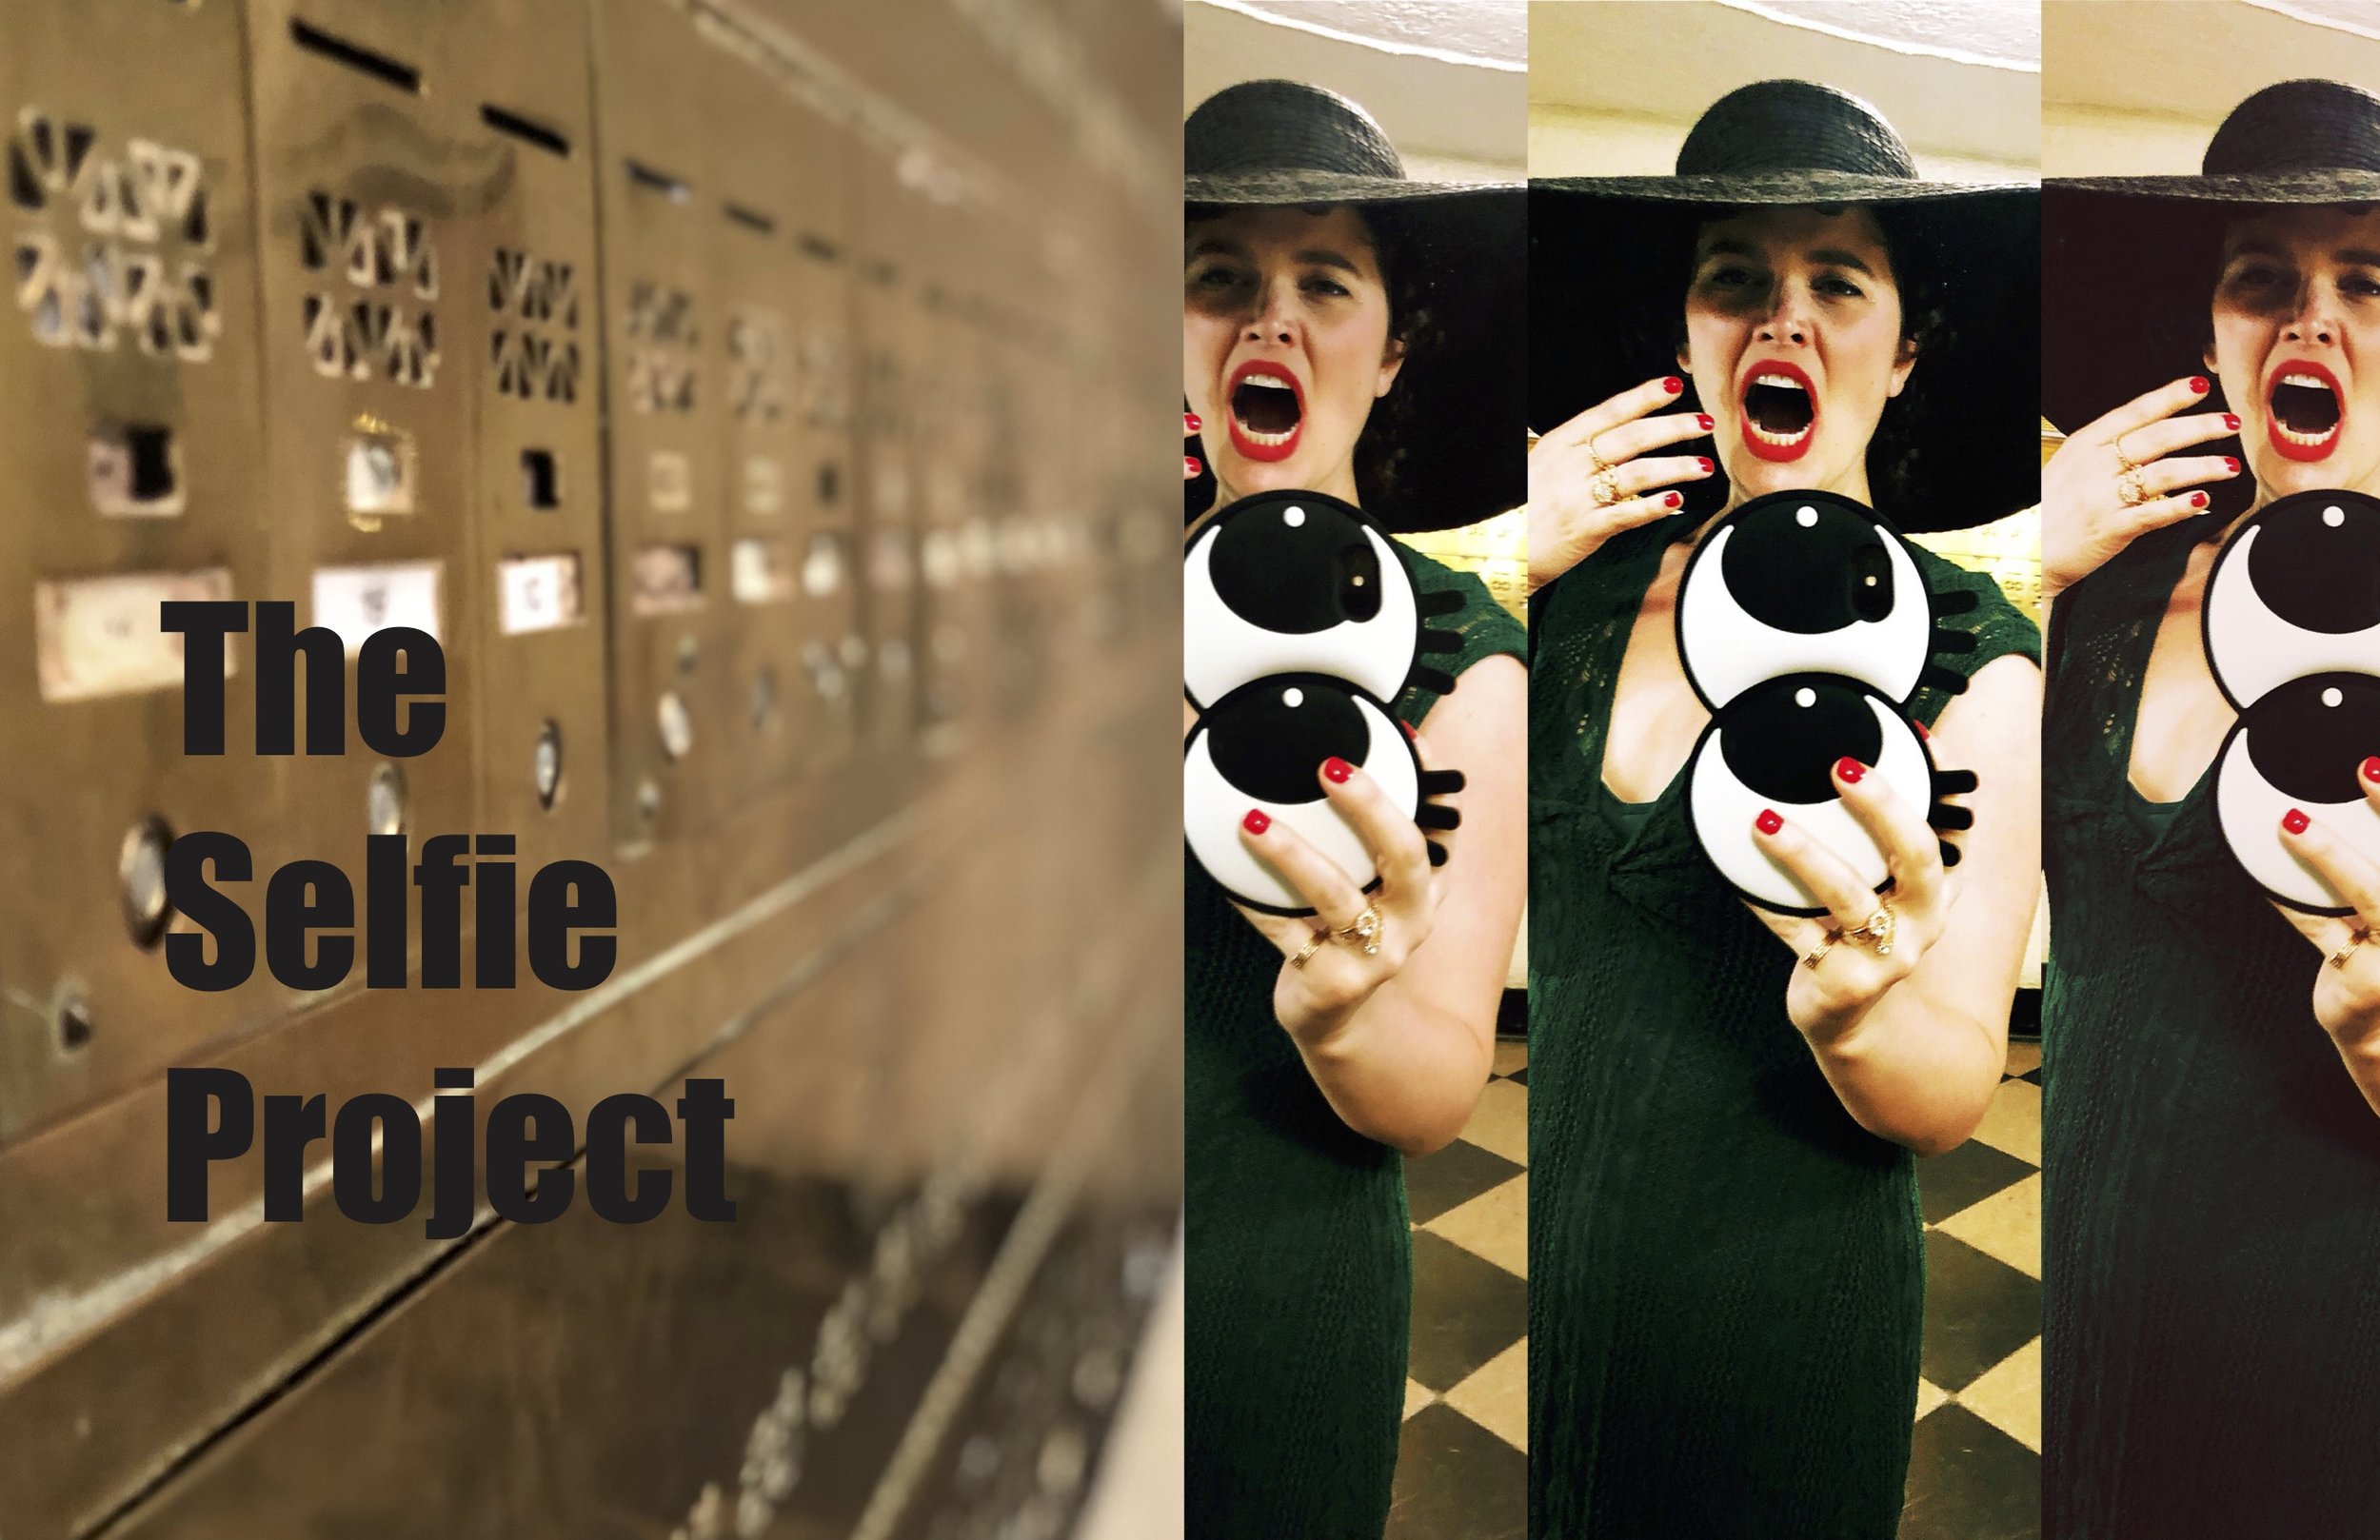 the selfie project opener 3.jpg